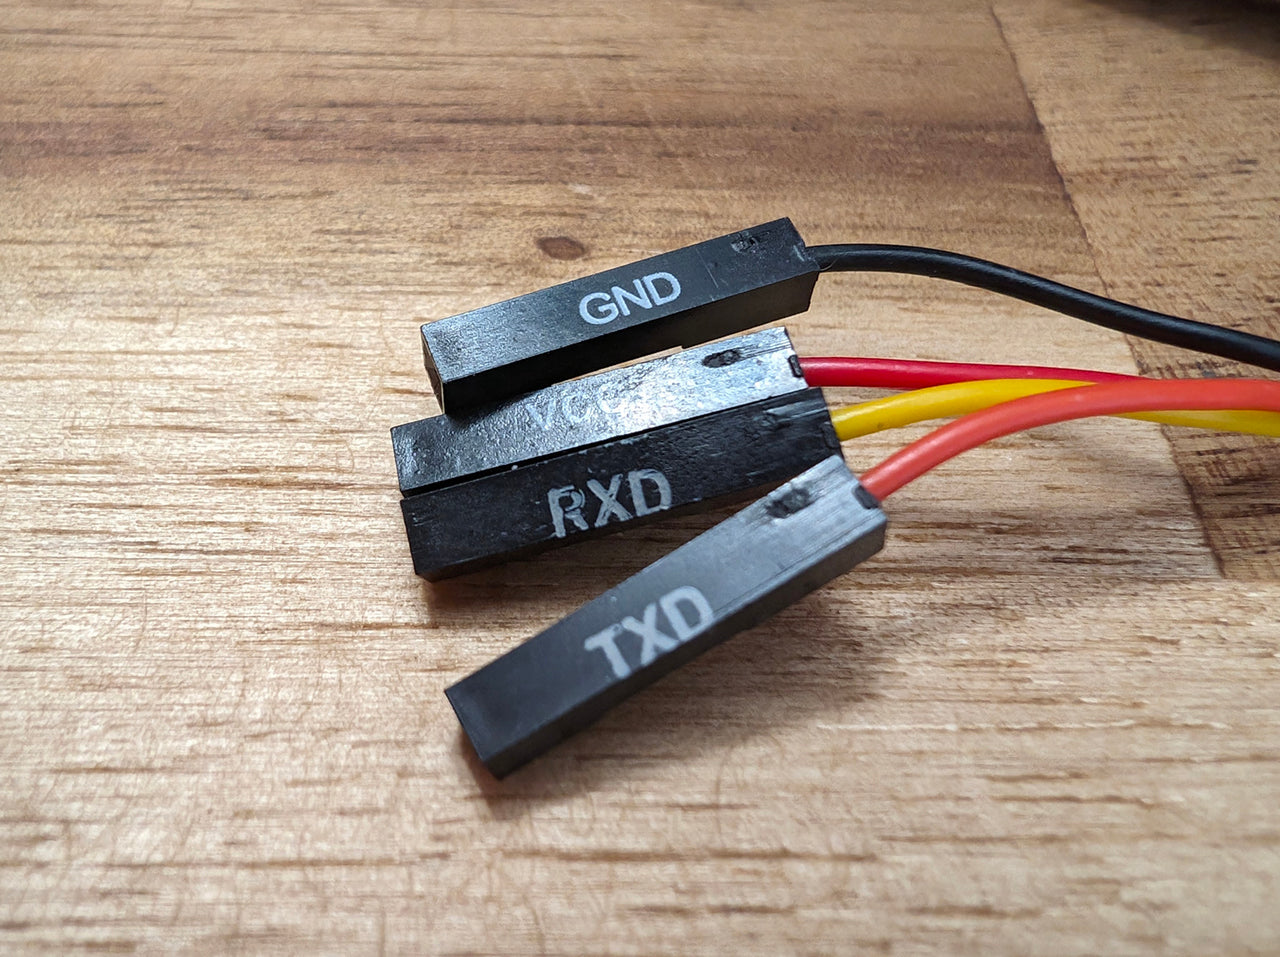 USB Cable w/FTDI set to 5V